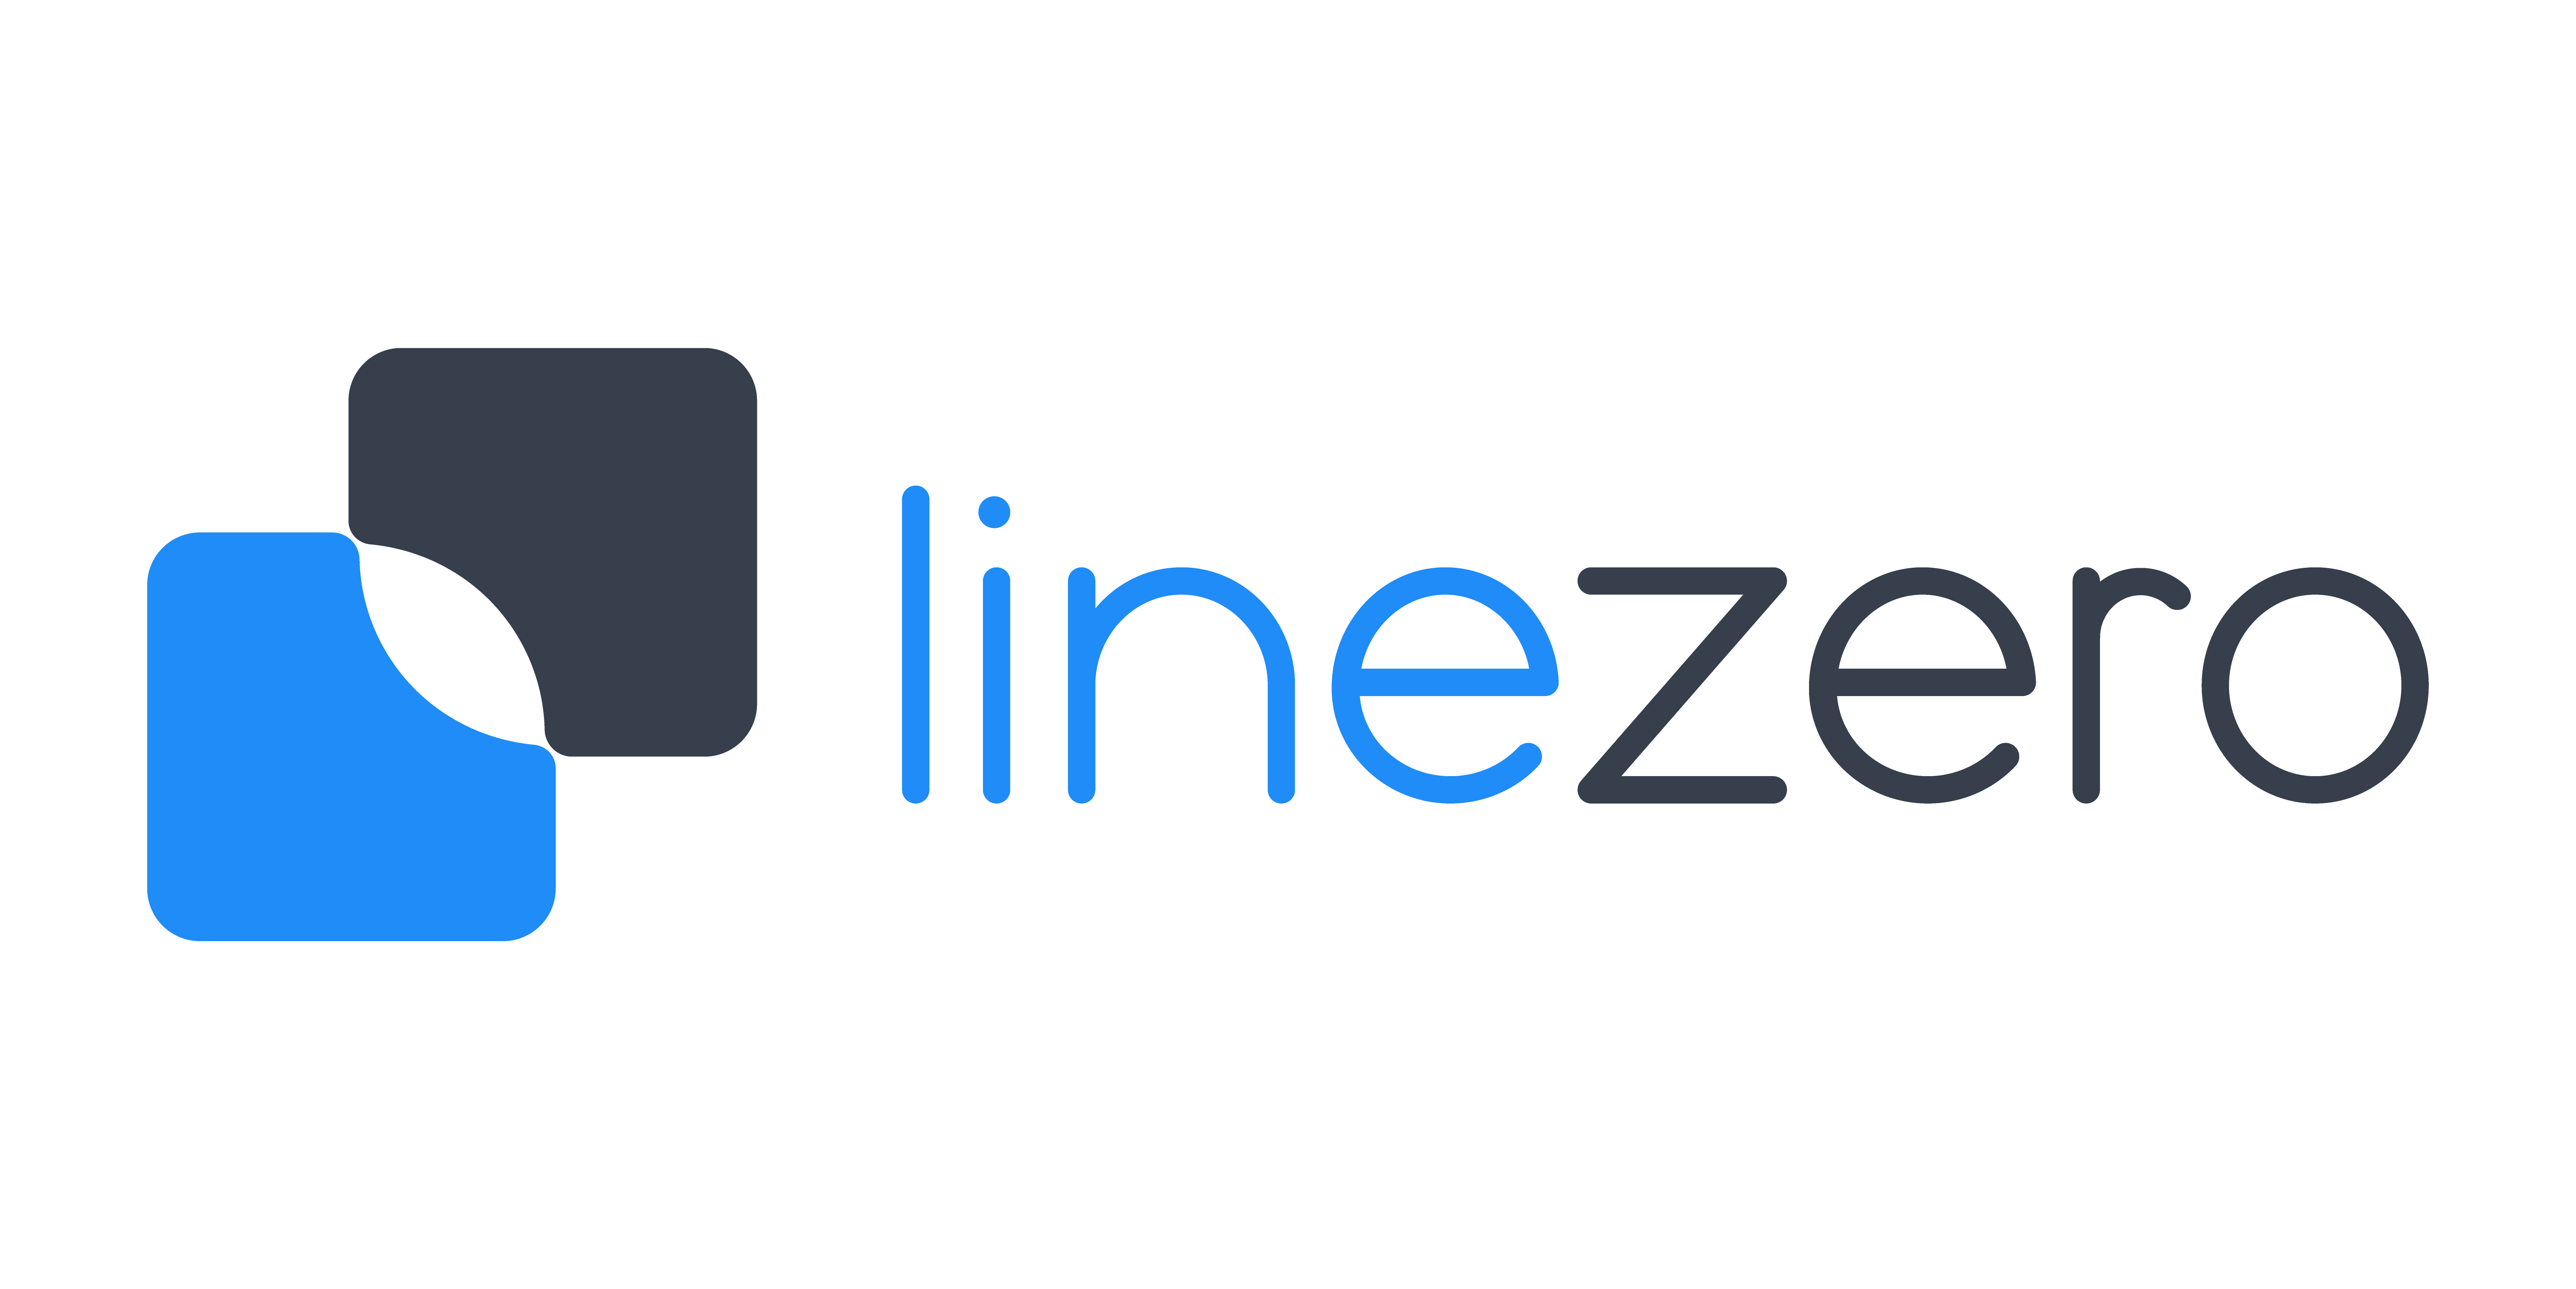 LineZero Partners with Meta to Host Exclusive Mixed Reality Event